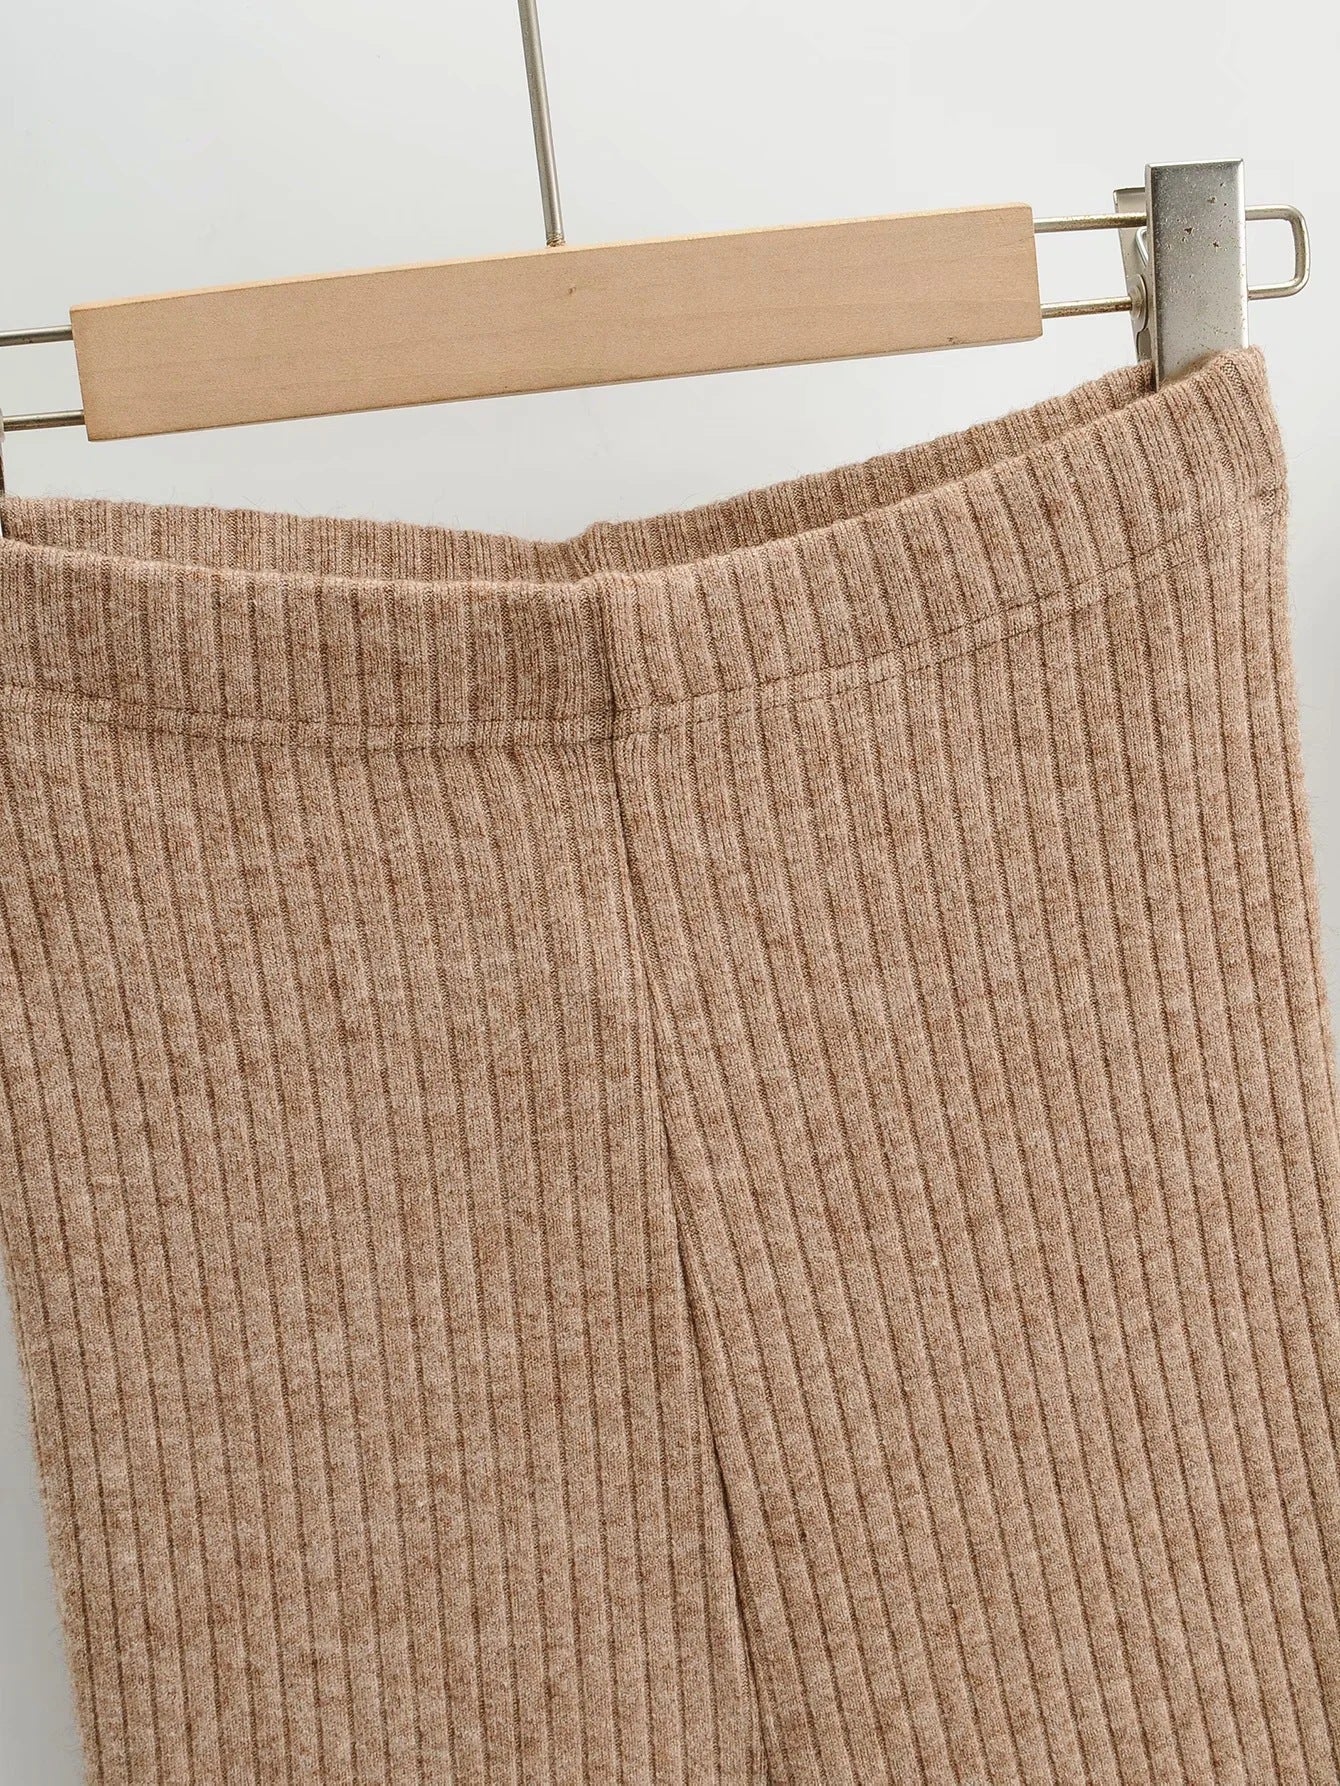 Sexy Women Knitting Midriff Baring Tops And High Waist Pants